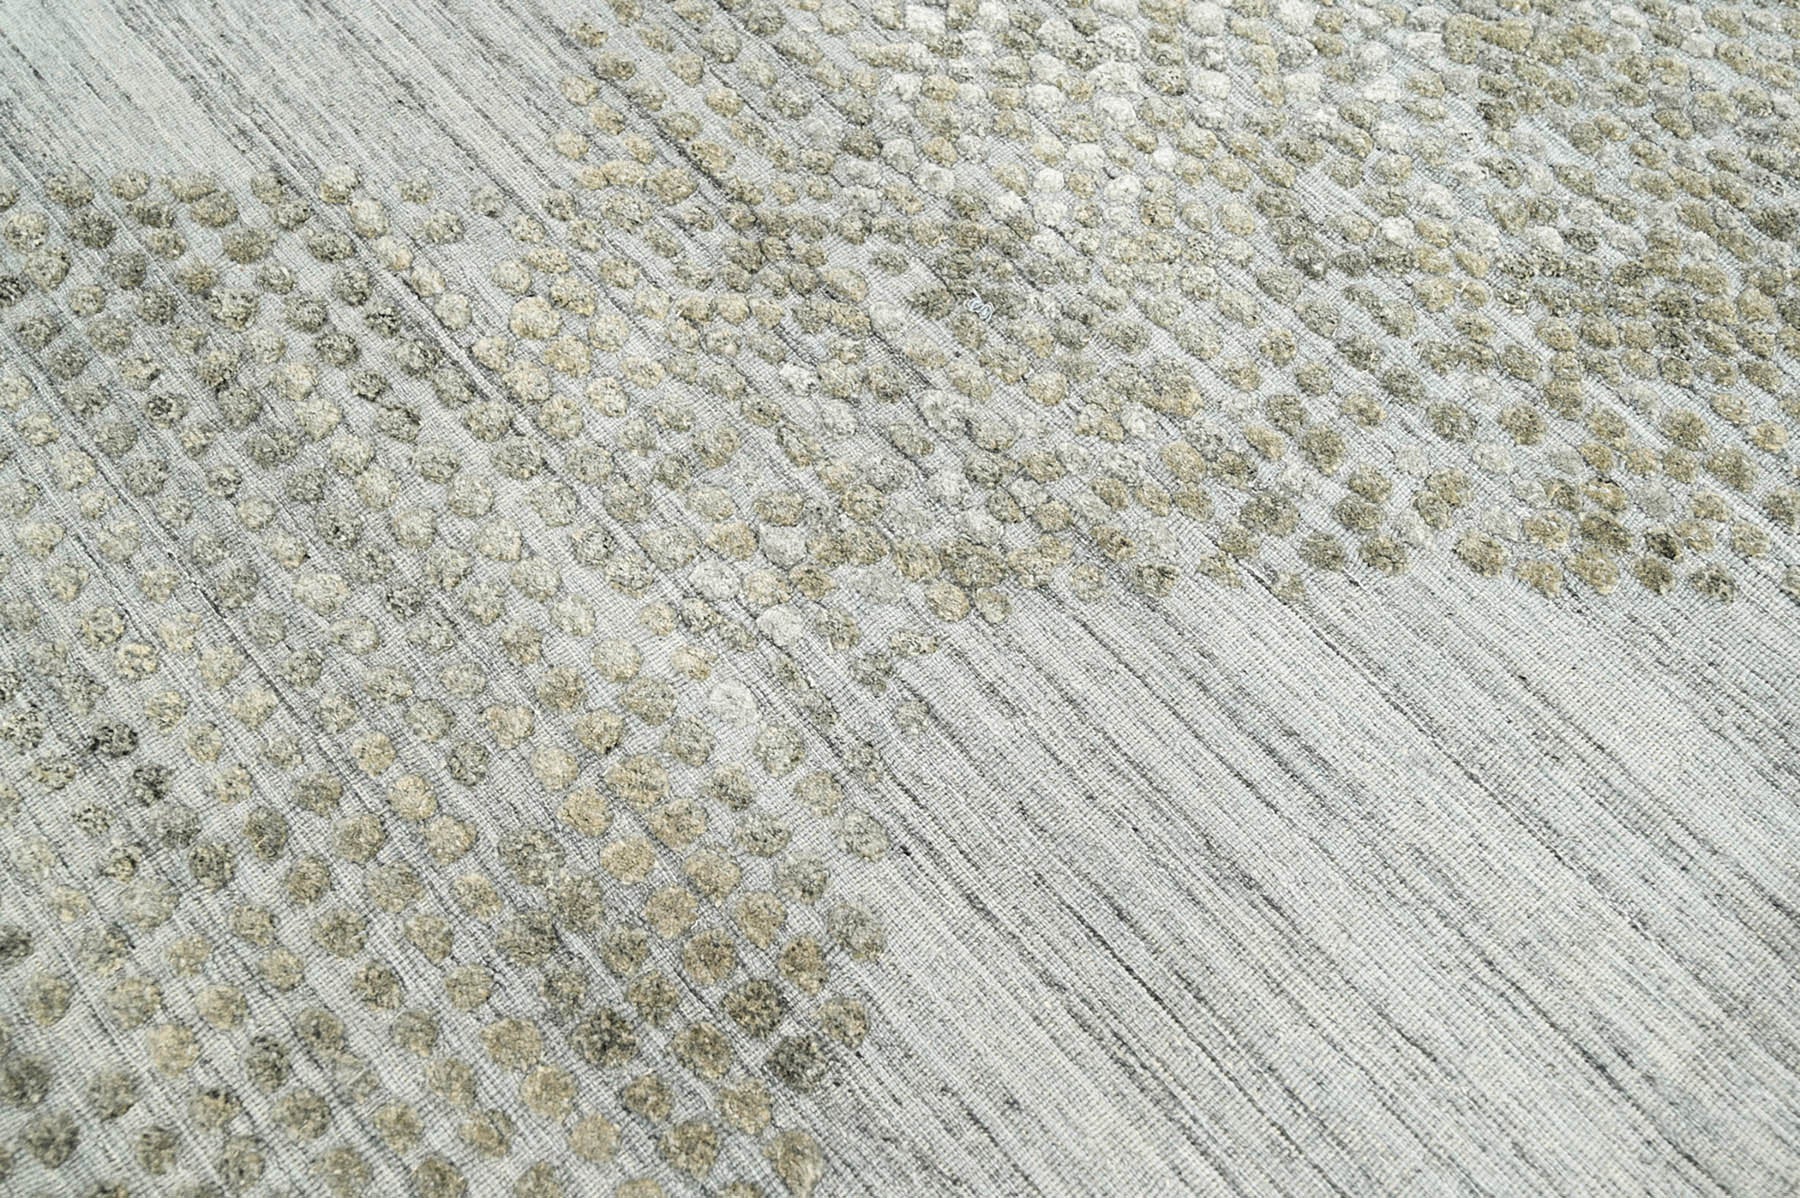 Runner 4x6 Gray LoomBloom Hand Knotted Modern & Contemporary Textured Tibetan 100% Wool Oriental Area Rug